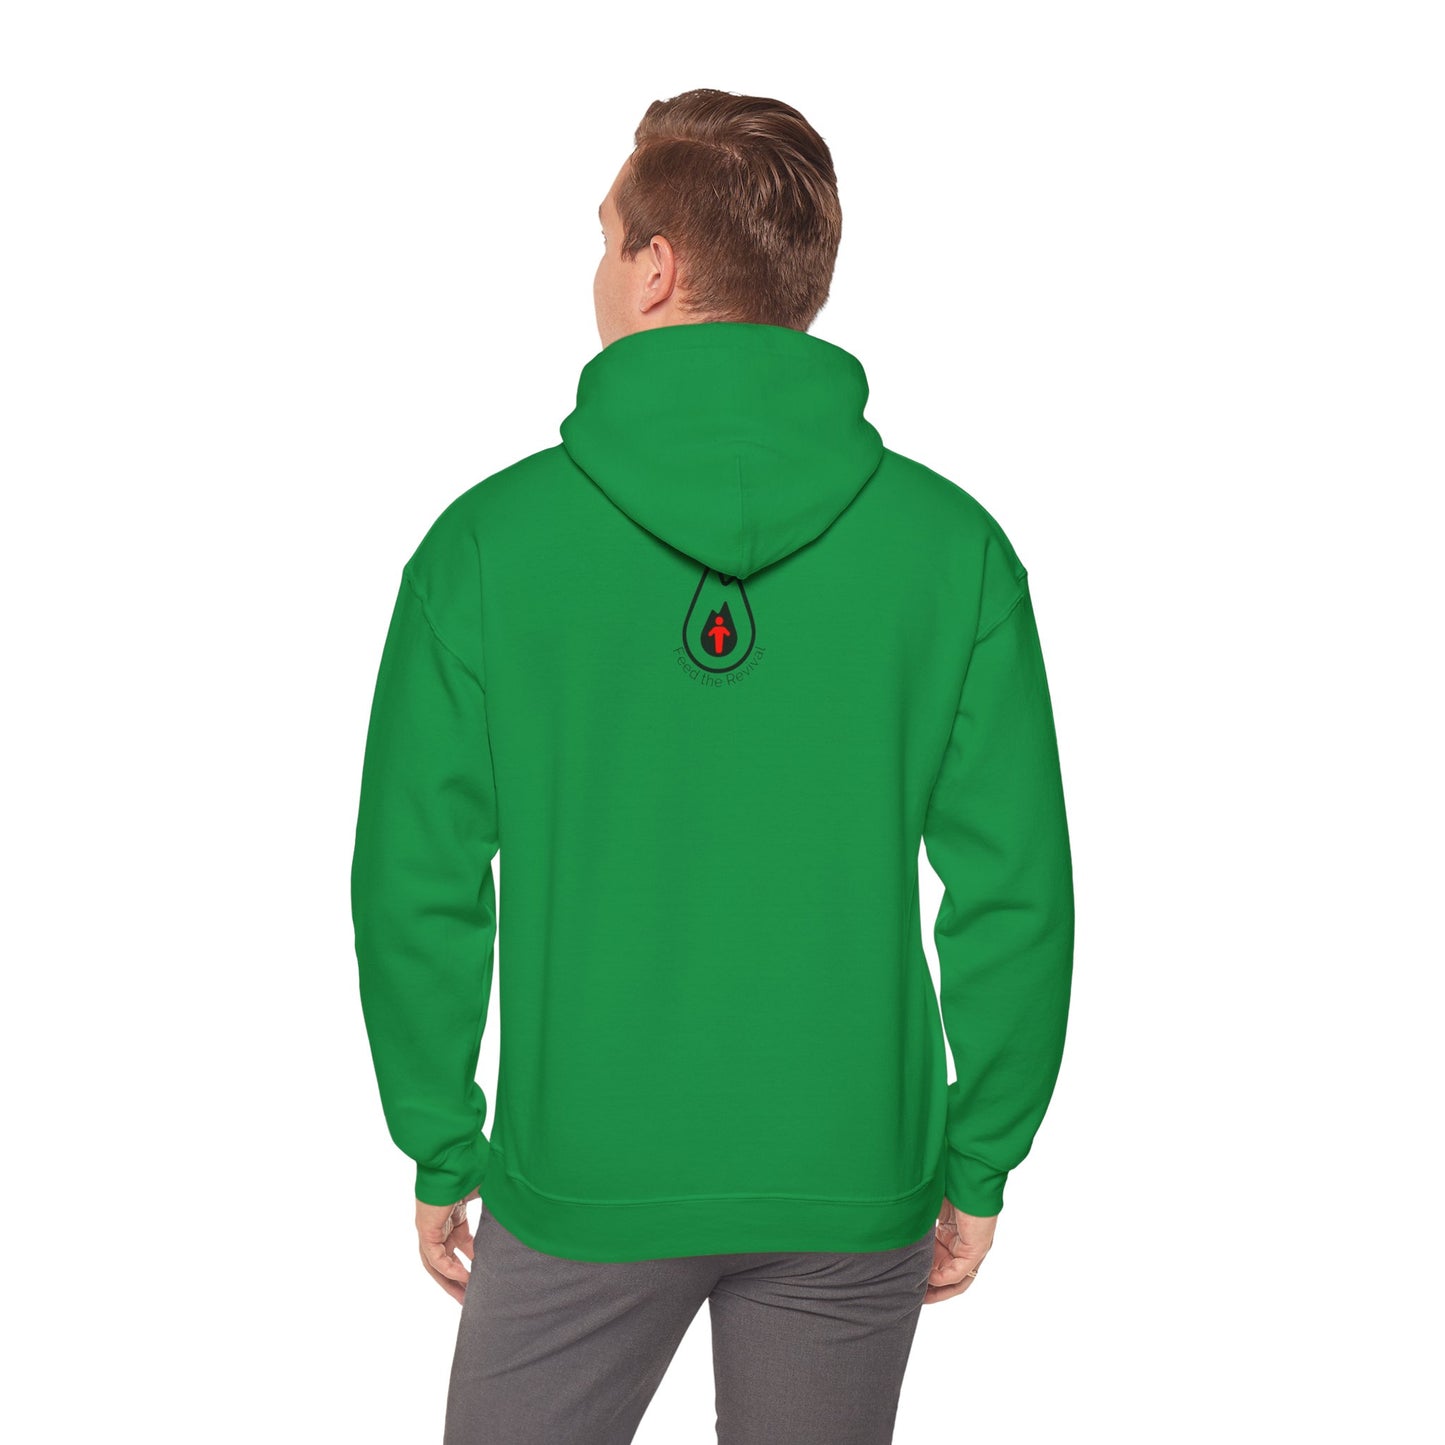 Be Faithful - Unisex Heavy Blend™ Hooded Sweatshirt